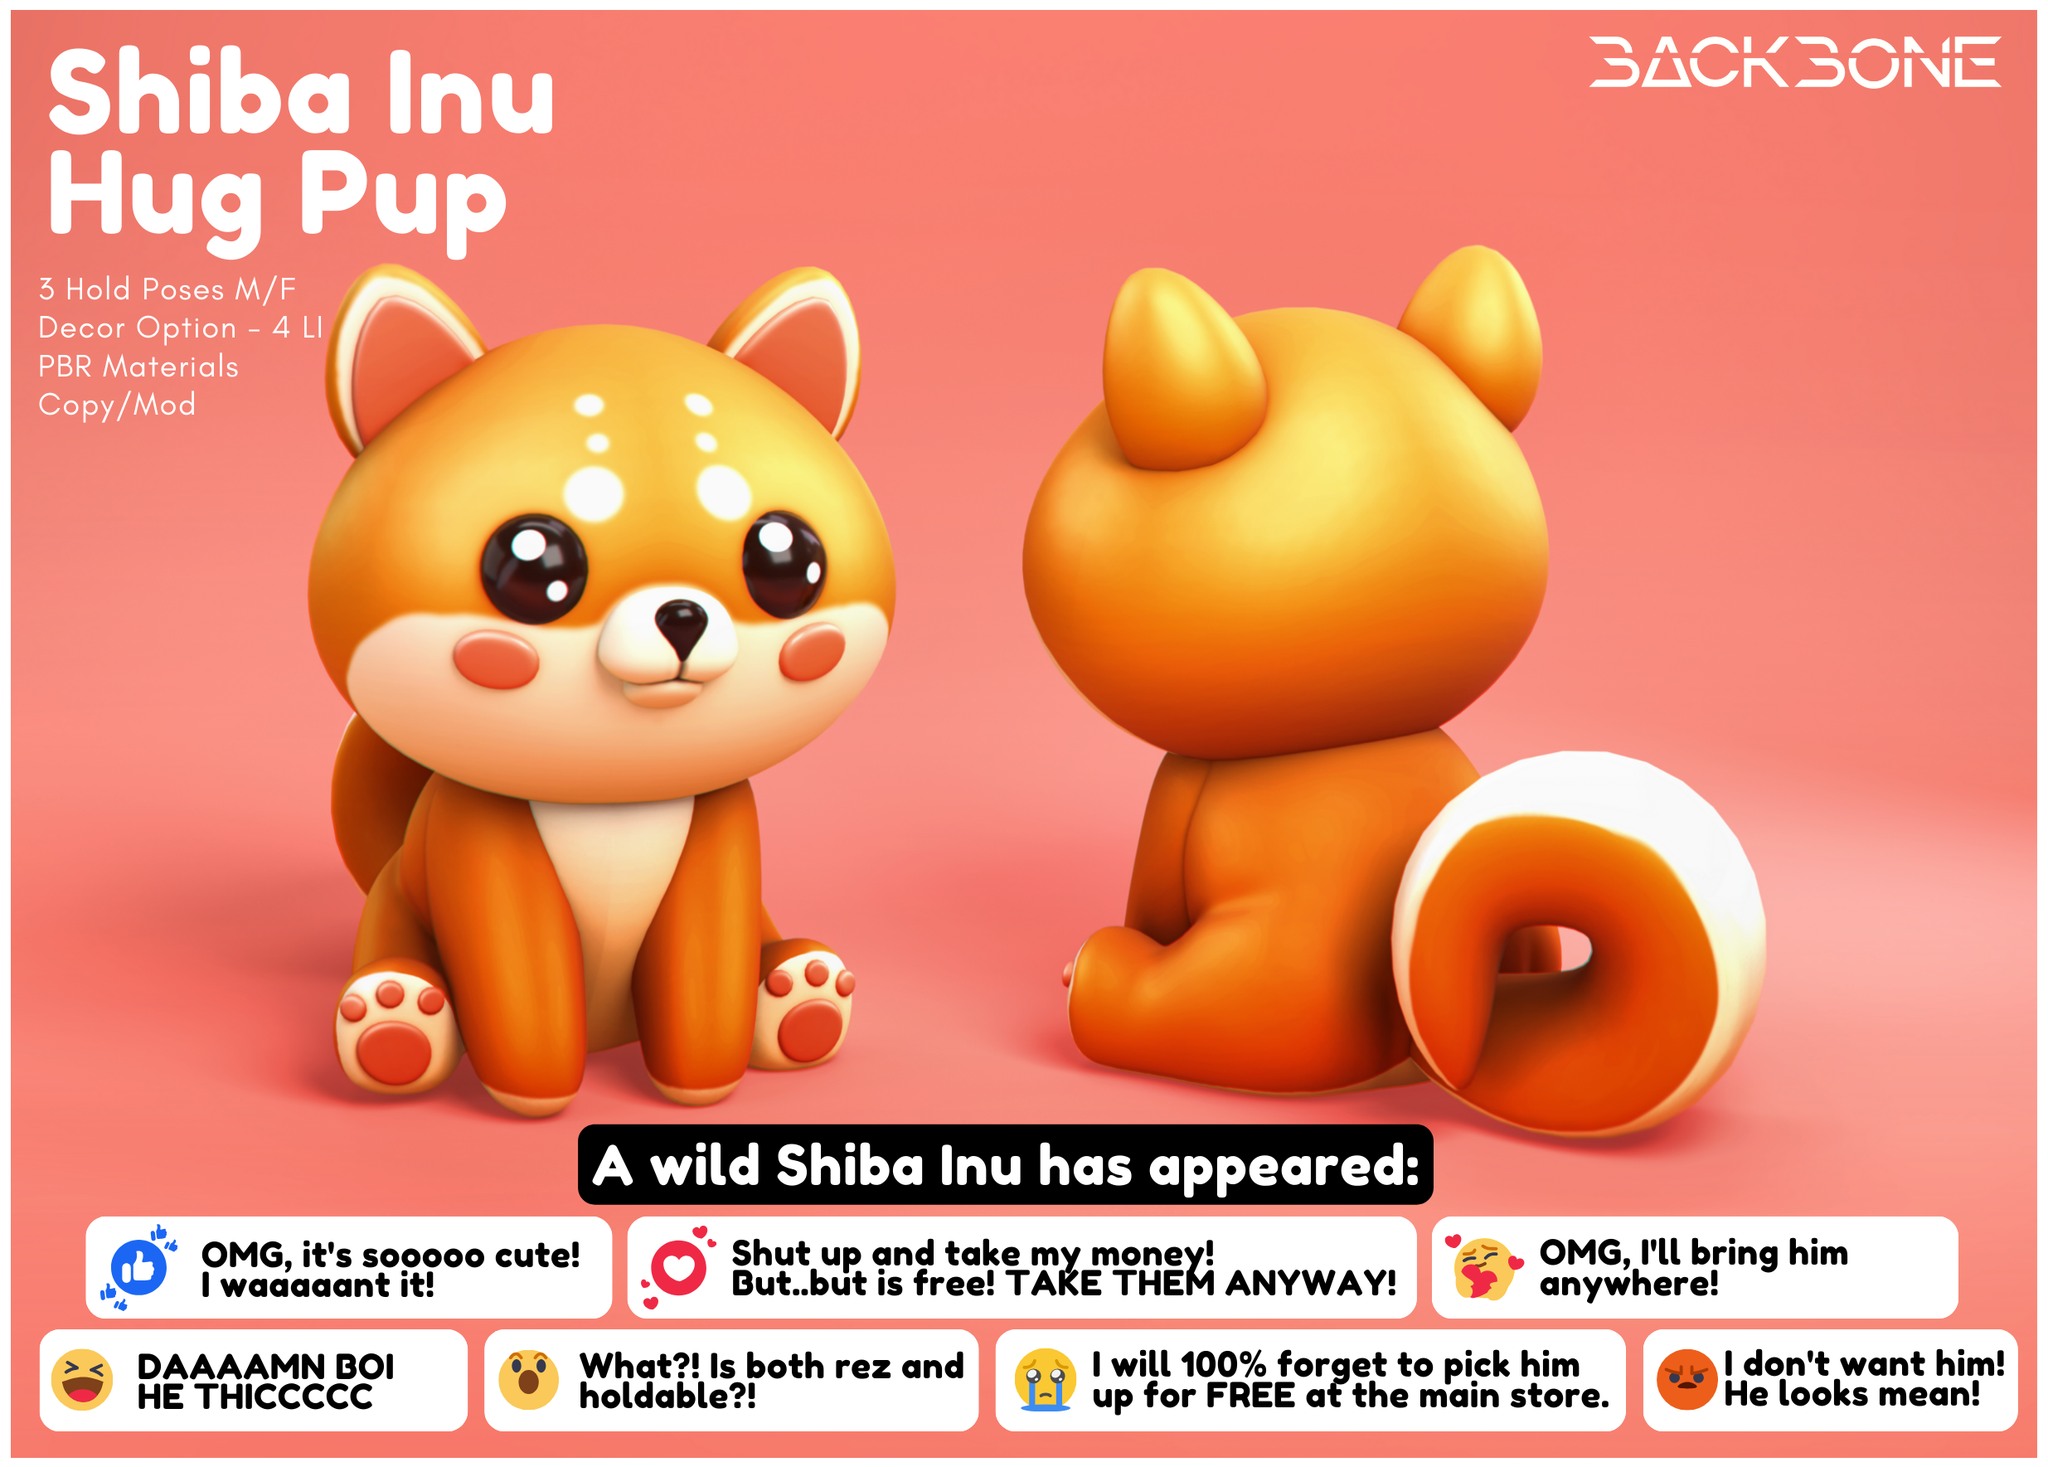 Backbone – Shiba Inu Hug Pup